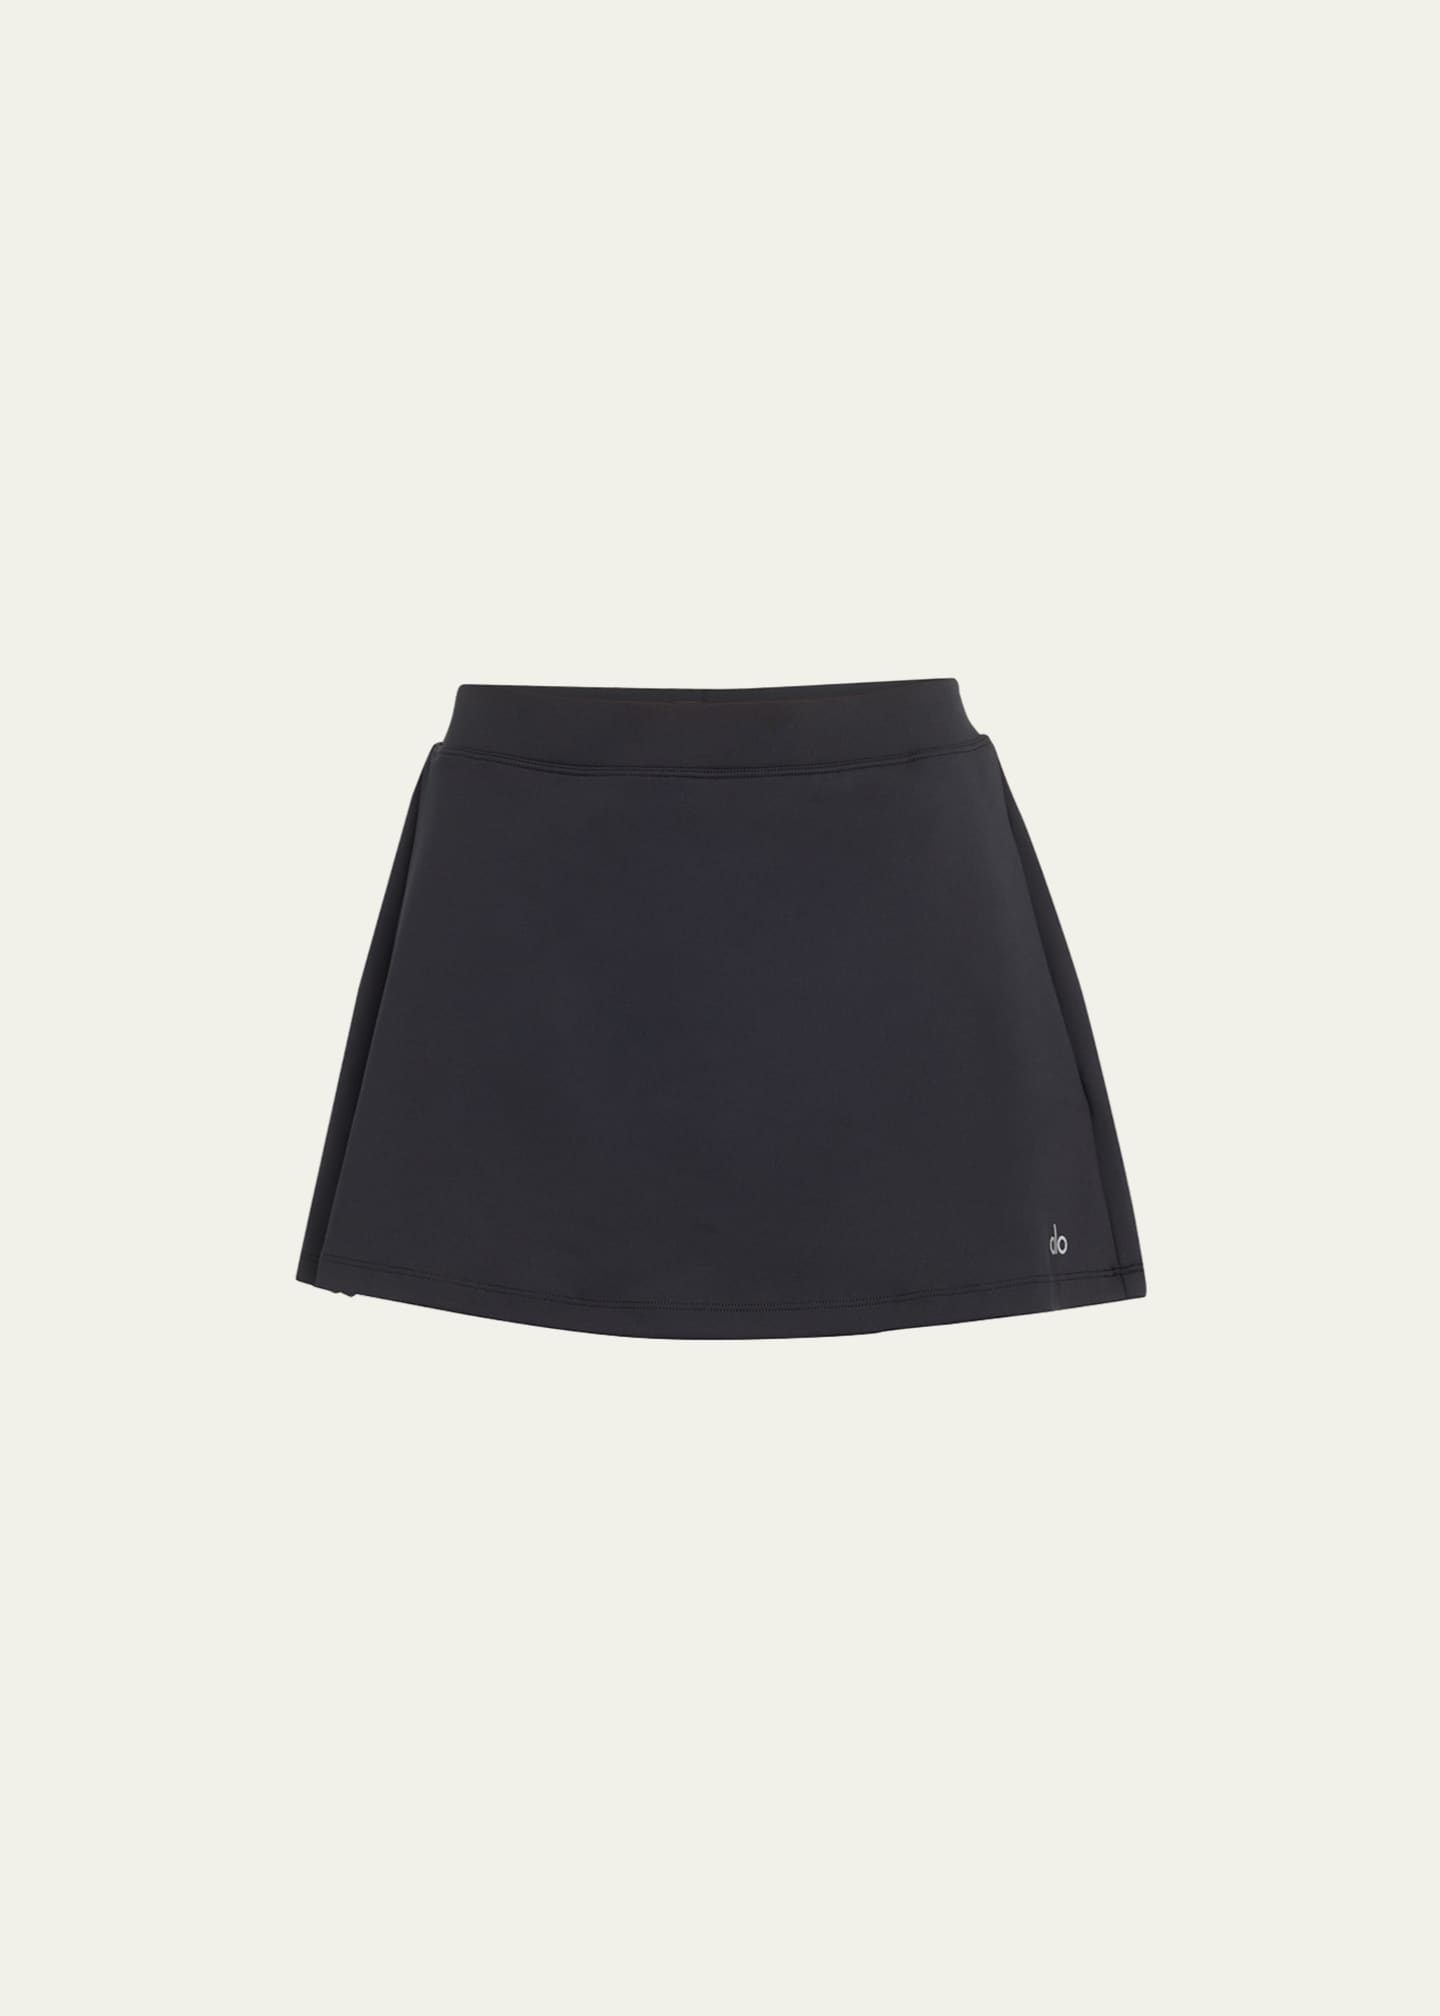 Alo Yoga Mini Skirts − Now: 16 Items at $68.00+